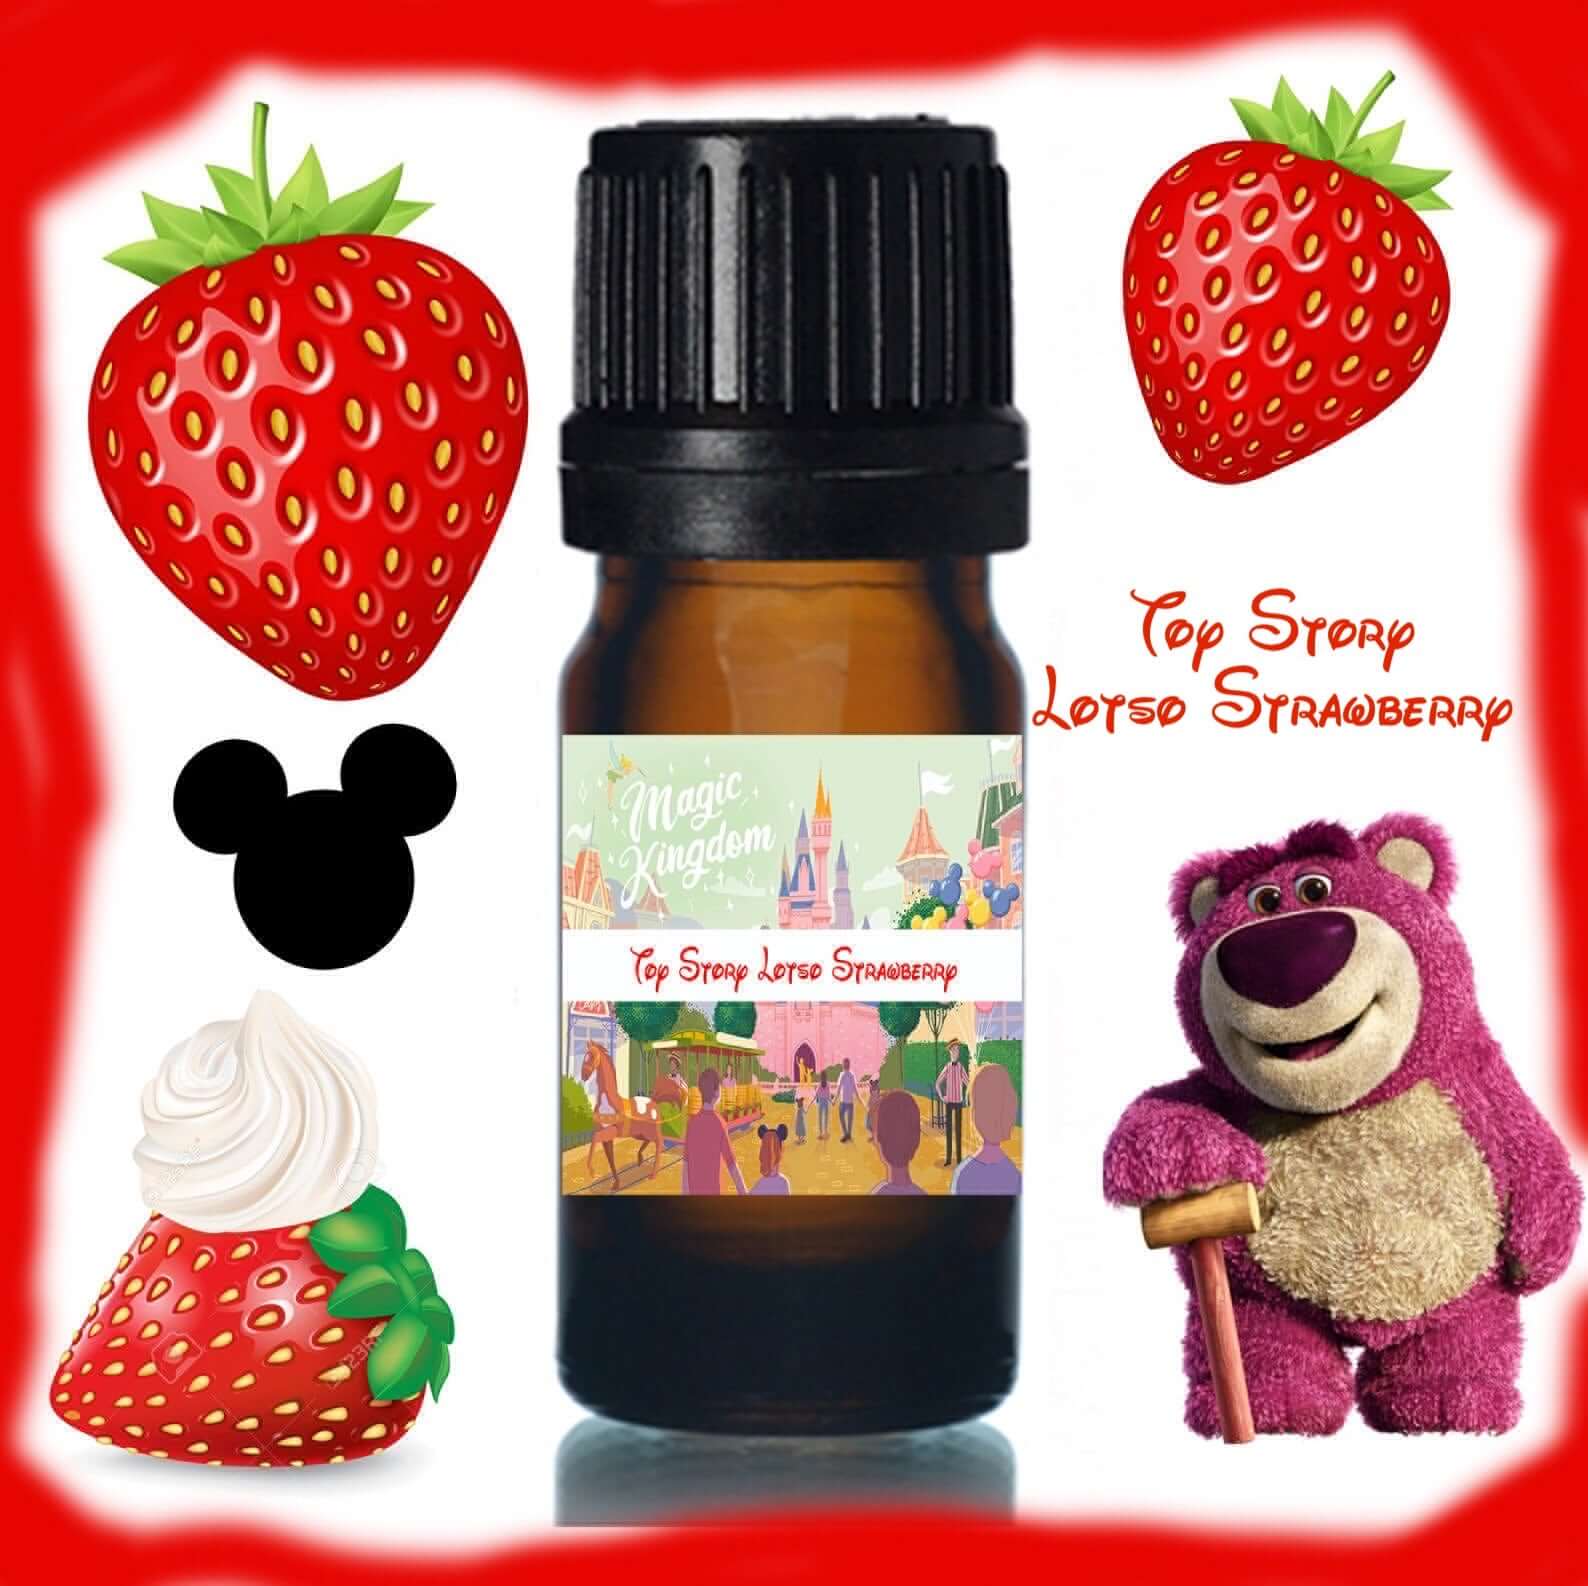 Toy Story Latso Strawberry Fragrance Oil...